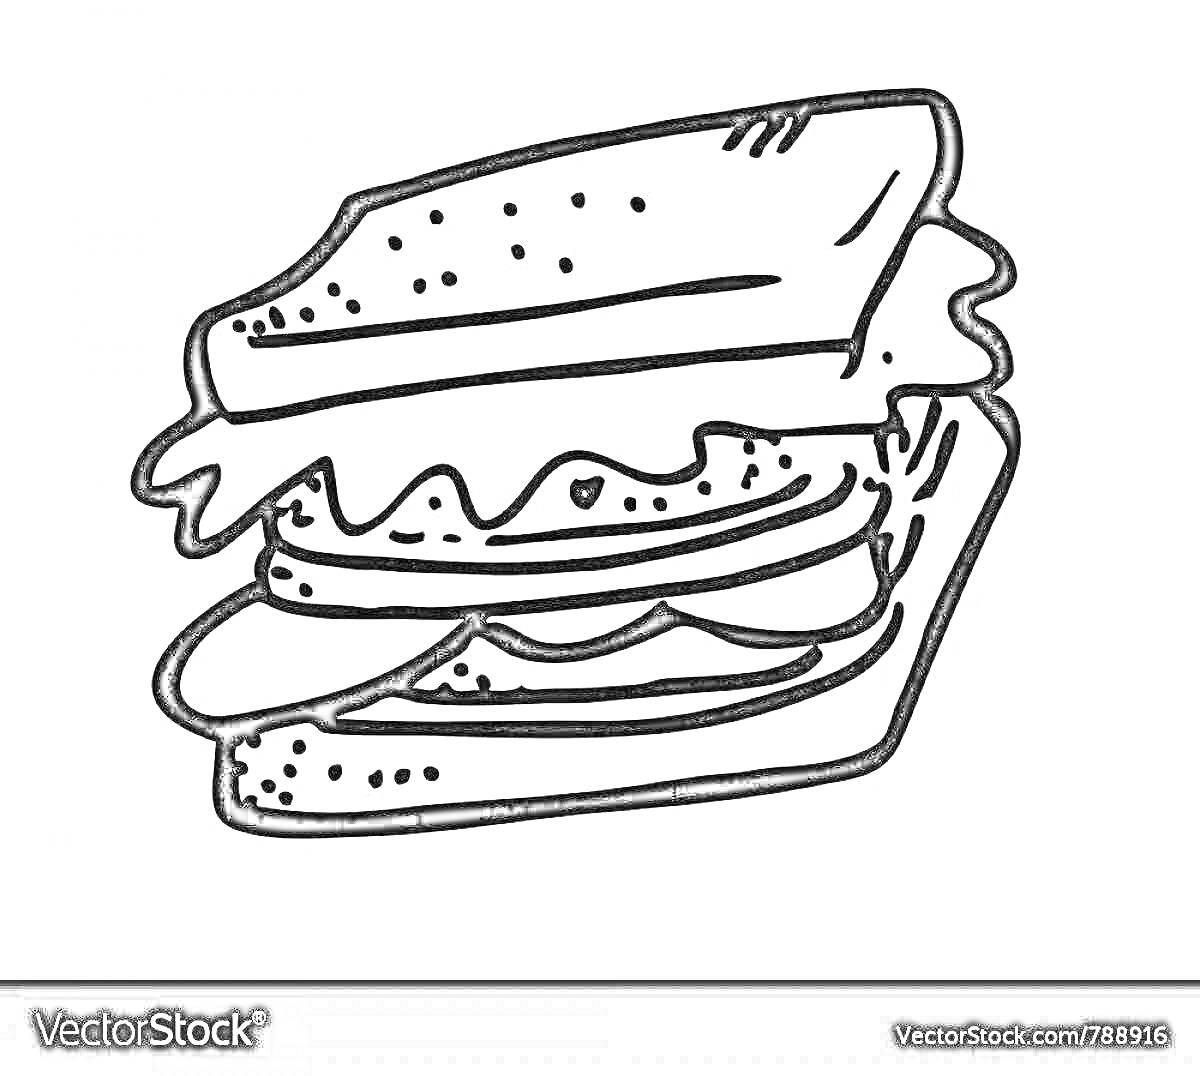 Раскраска Сэндвич с двумя ломтиками хлеба, листом салата и ломтиками помидора